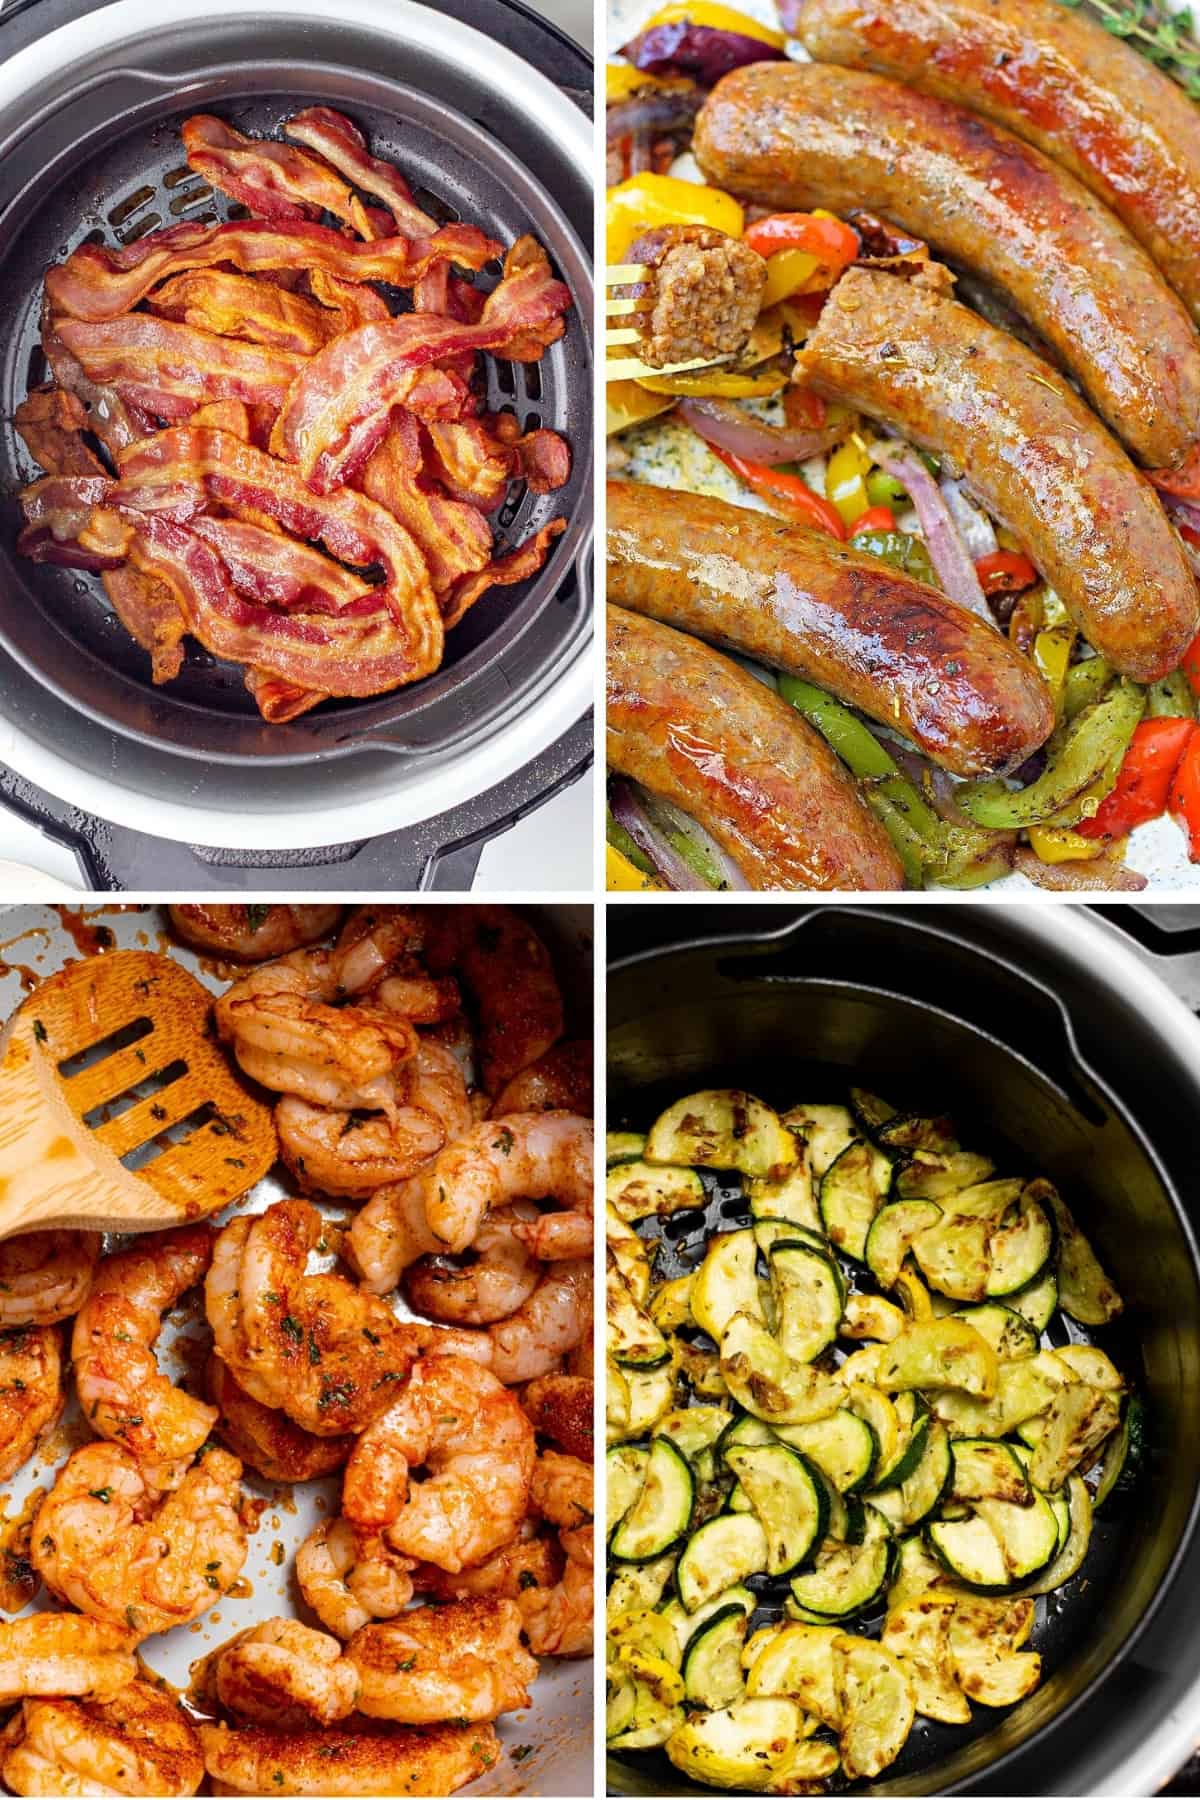 keto Ninja Foodi recipes like air fryer bacon, air fryer Italian sausage, cajun shrimp, and air fryer squash